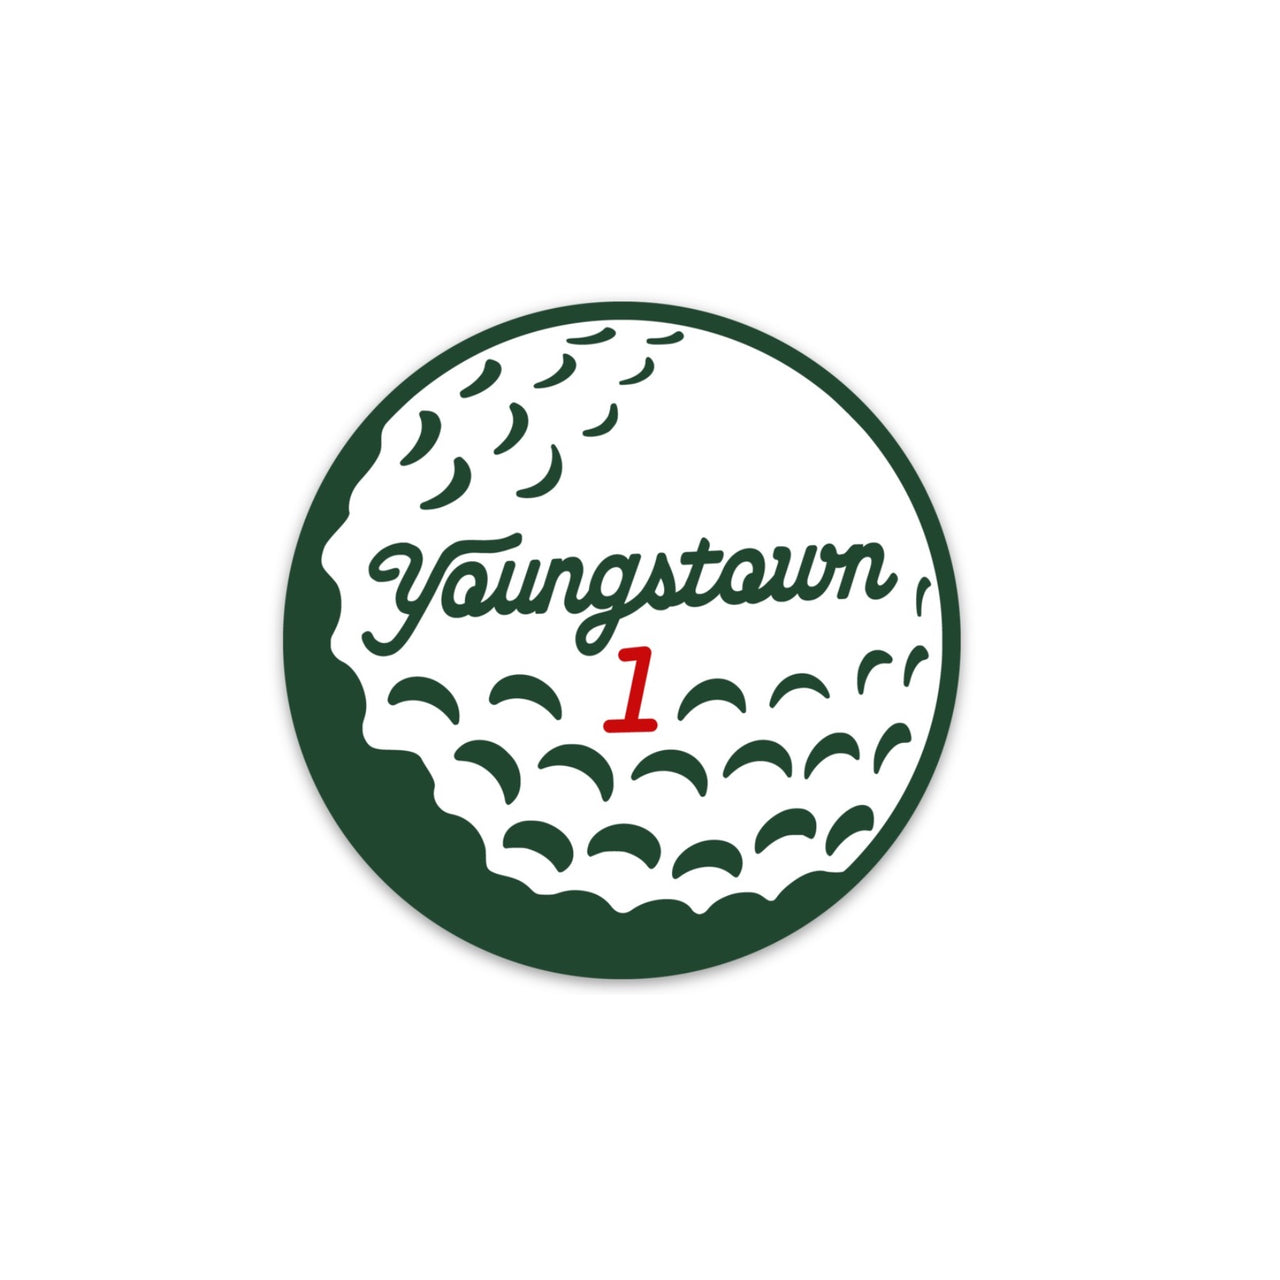 Youngstown Golf | Sticker